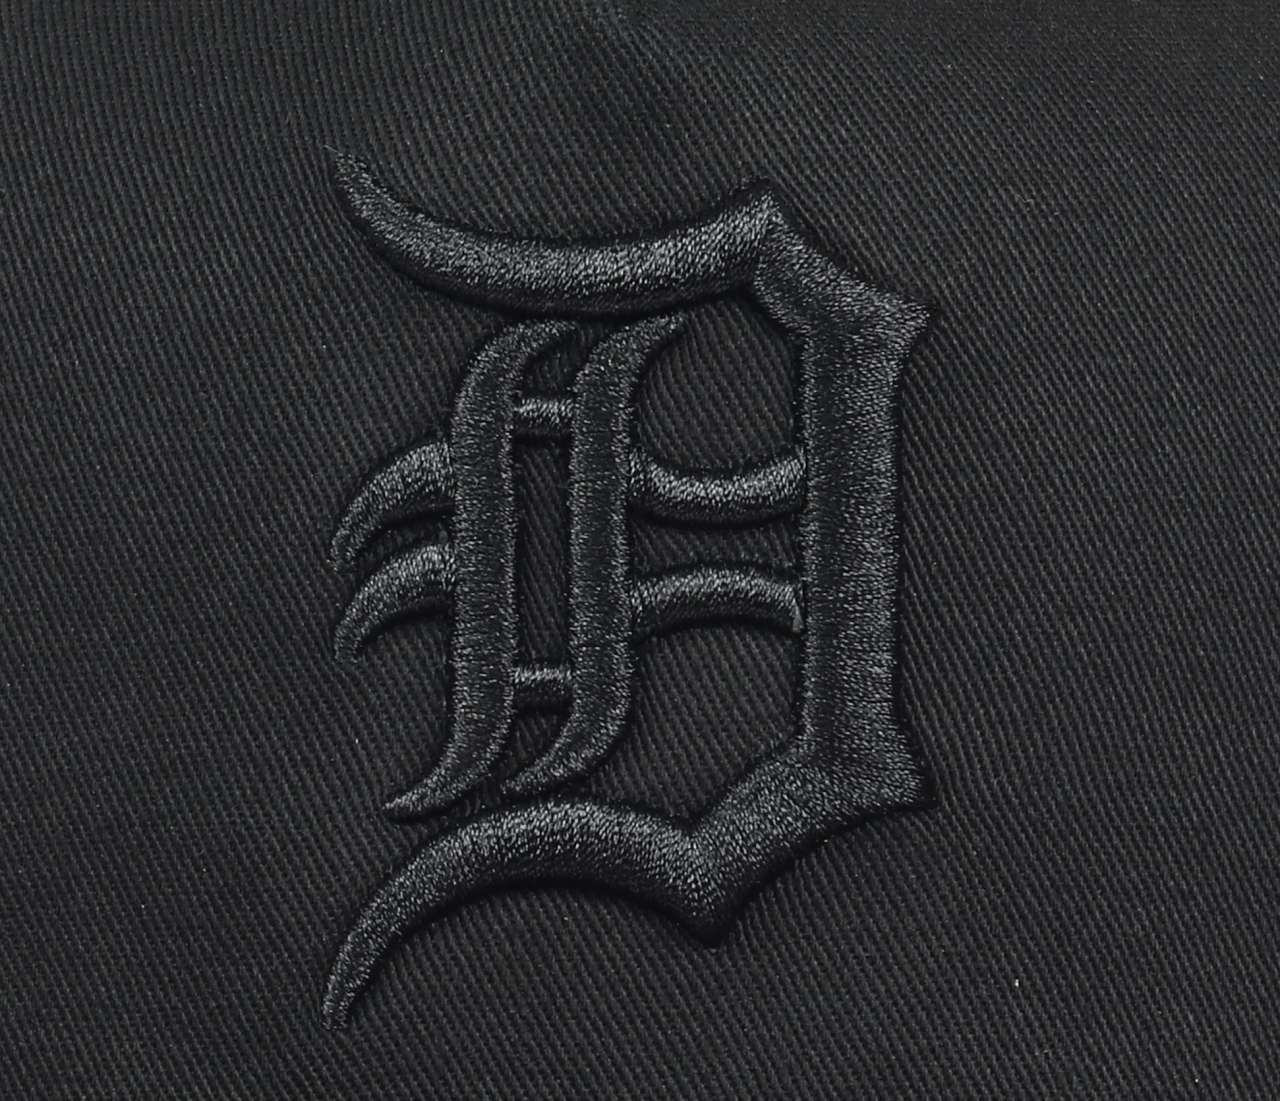 Detroit Tigers MLB Black on Black 9Forty A-Frame Snapback Cap New Era